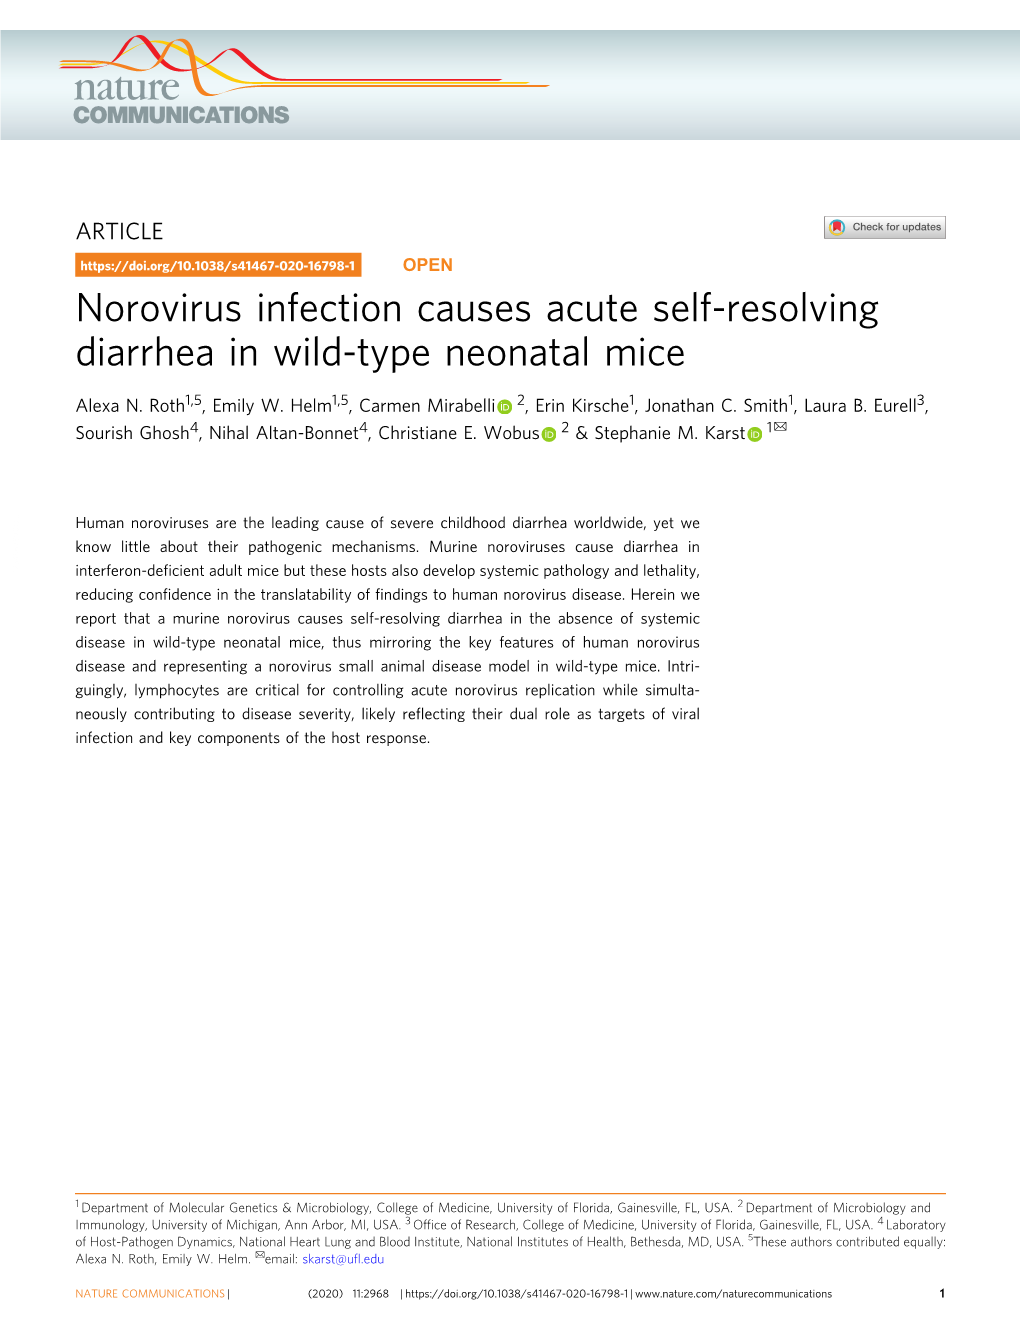 Norovirus Infection Causes Acute Self-Resolving Diarrhea in Wild-Type Neonatal Mice